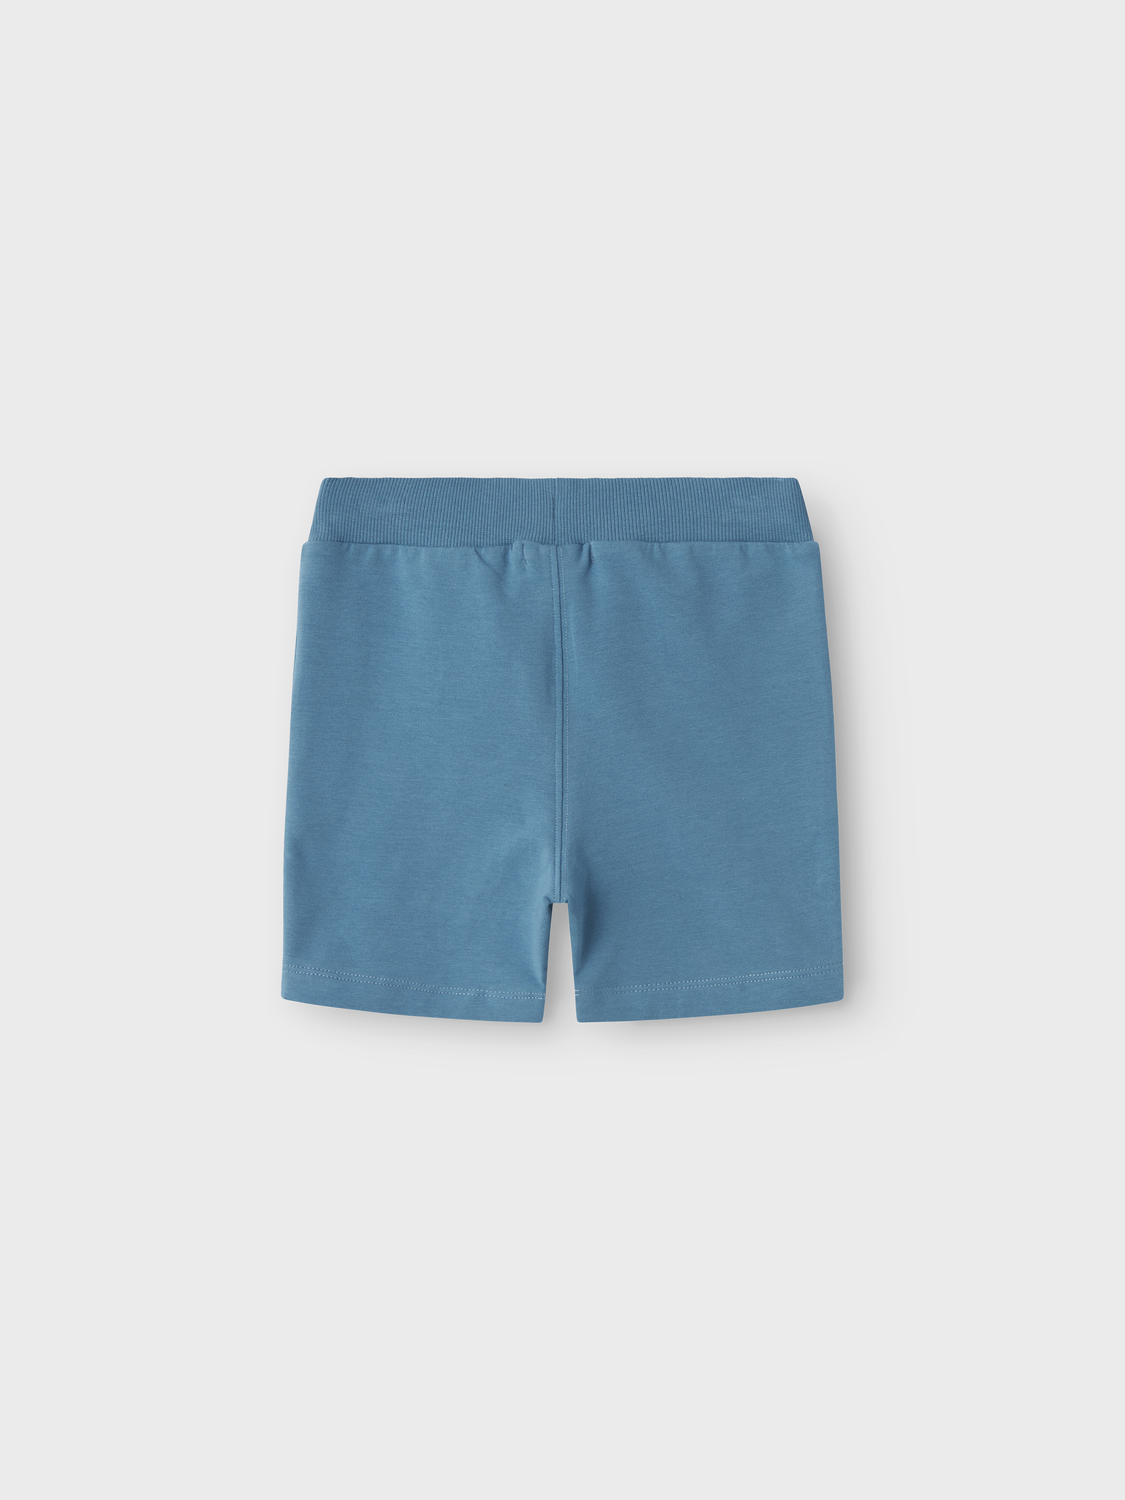 NMMAT Shorts - Provincial Blue